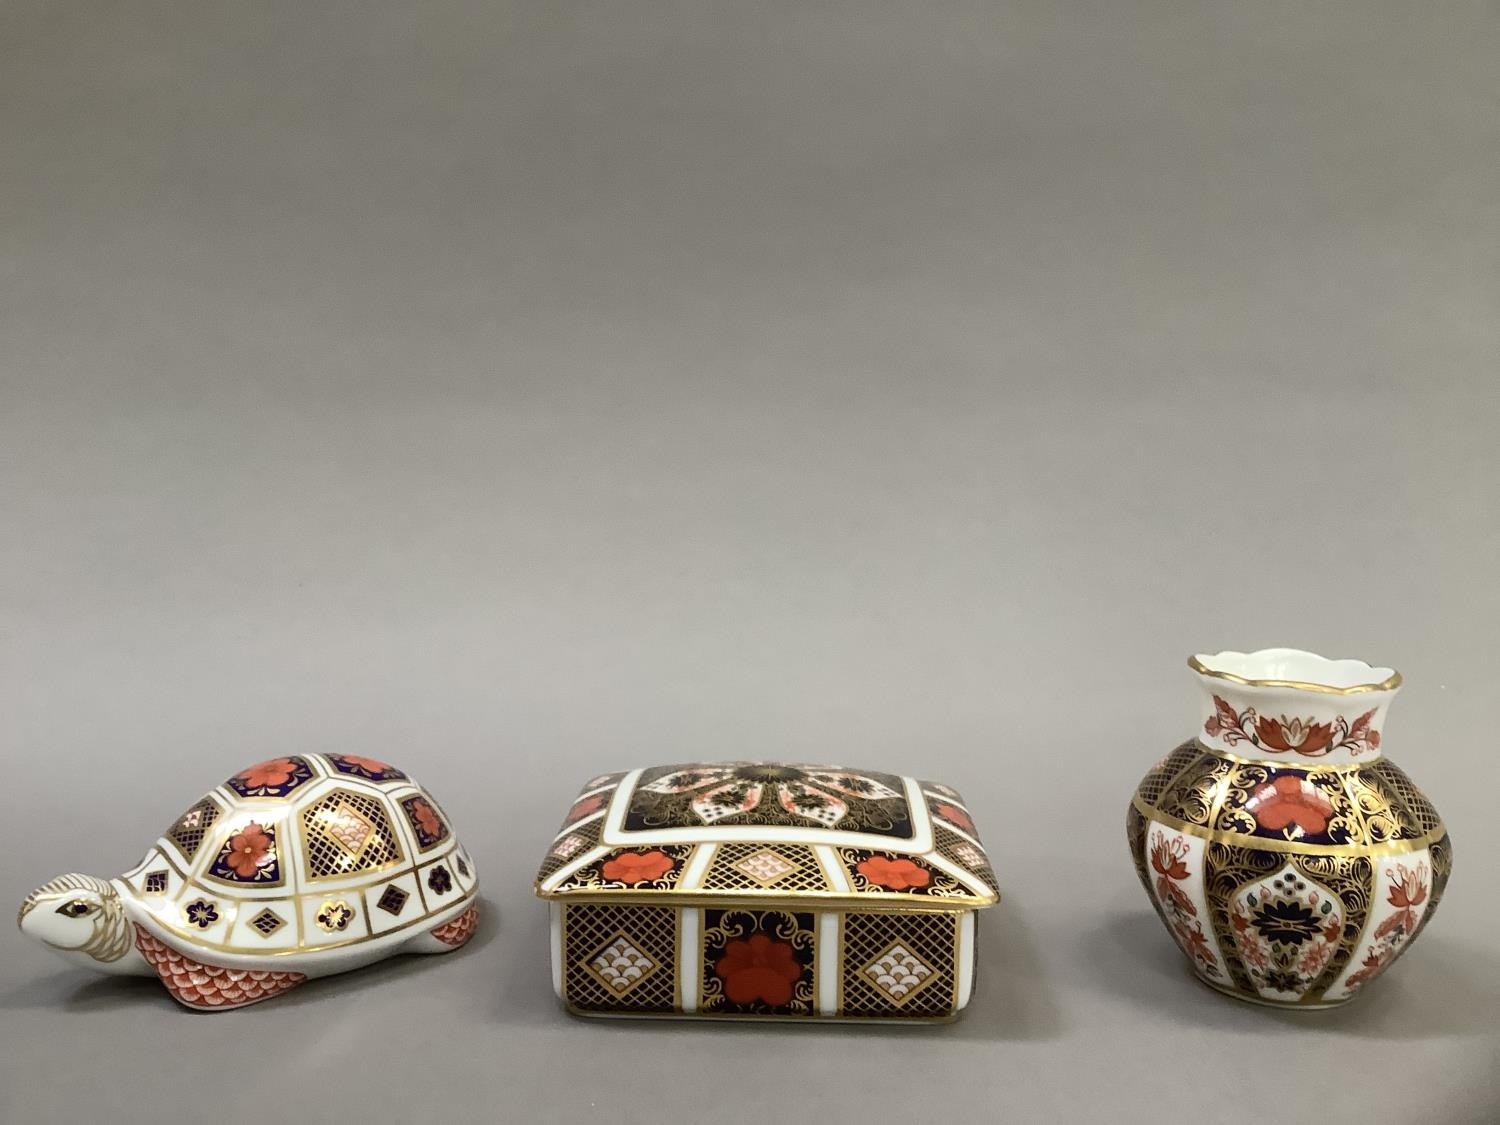 A Royal Crown Derby box and cover, pattern No: 1128, measuring 11cm x 9.5cm x 3.5cm, a vase,